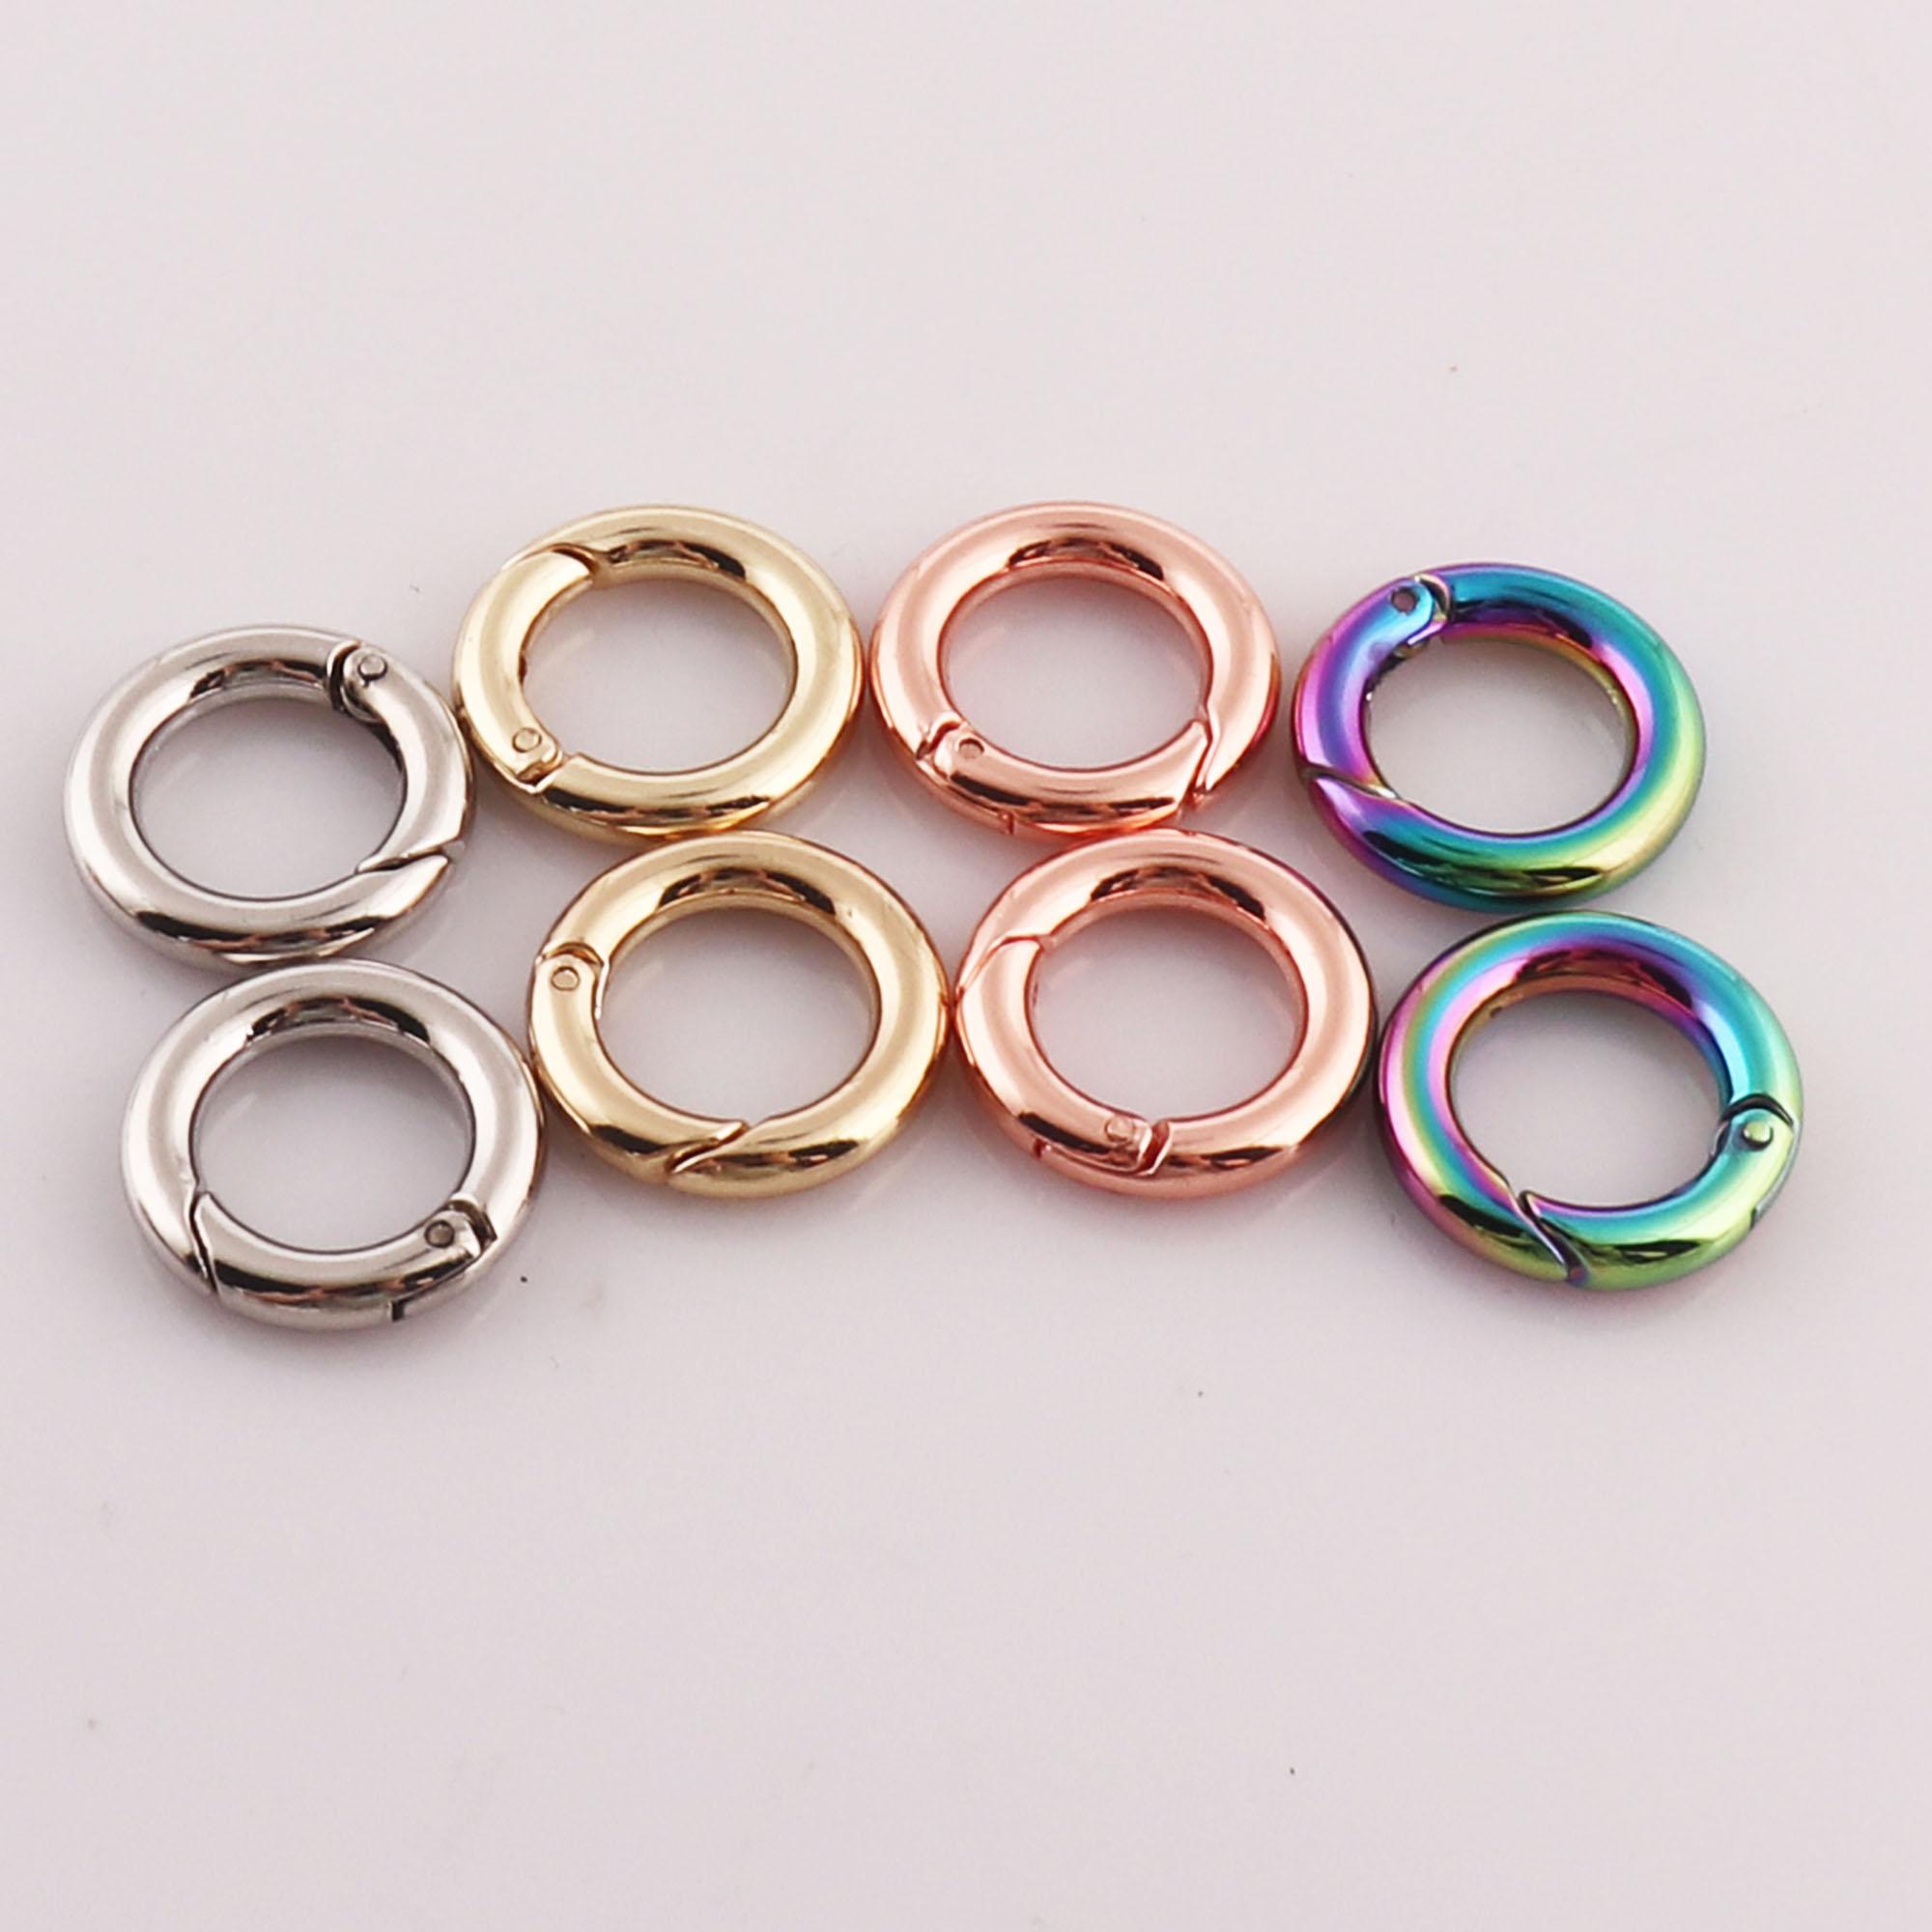 Изображение товара: 20 pcs Gold/Silver/Rose Gold/Rainbow Spring Ring buckles,Snap Ring Screw Spring Gate Ring Clasp,for webbing Purse Bag Handbag -3